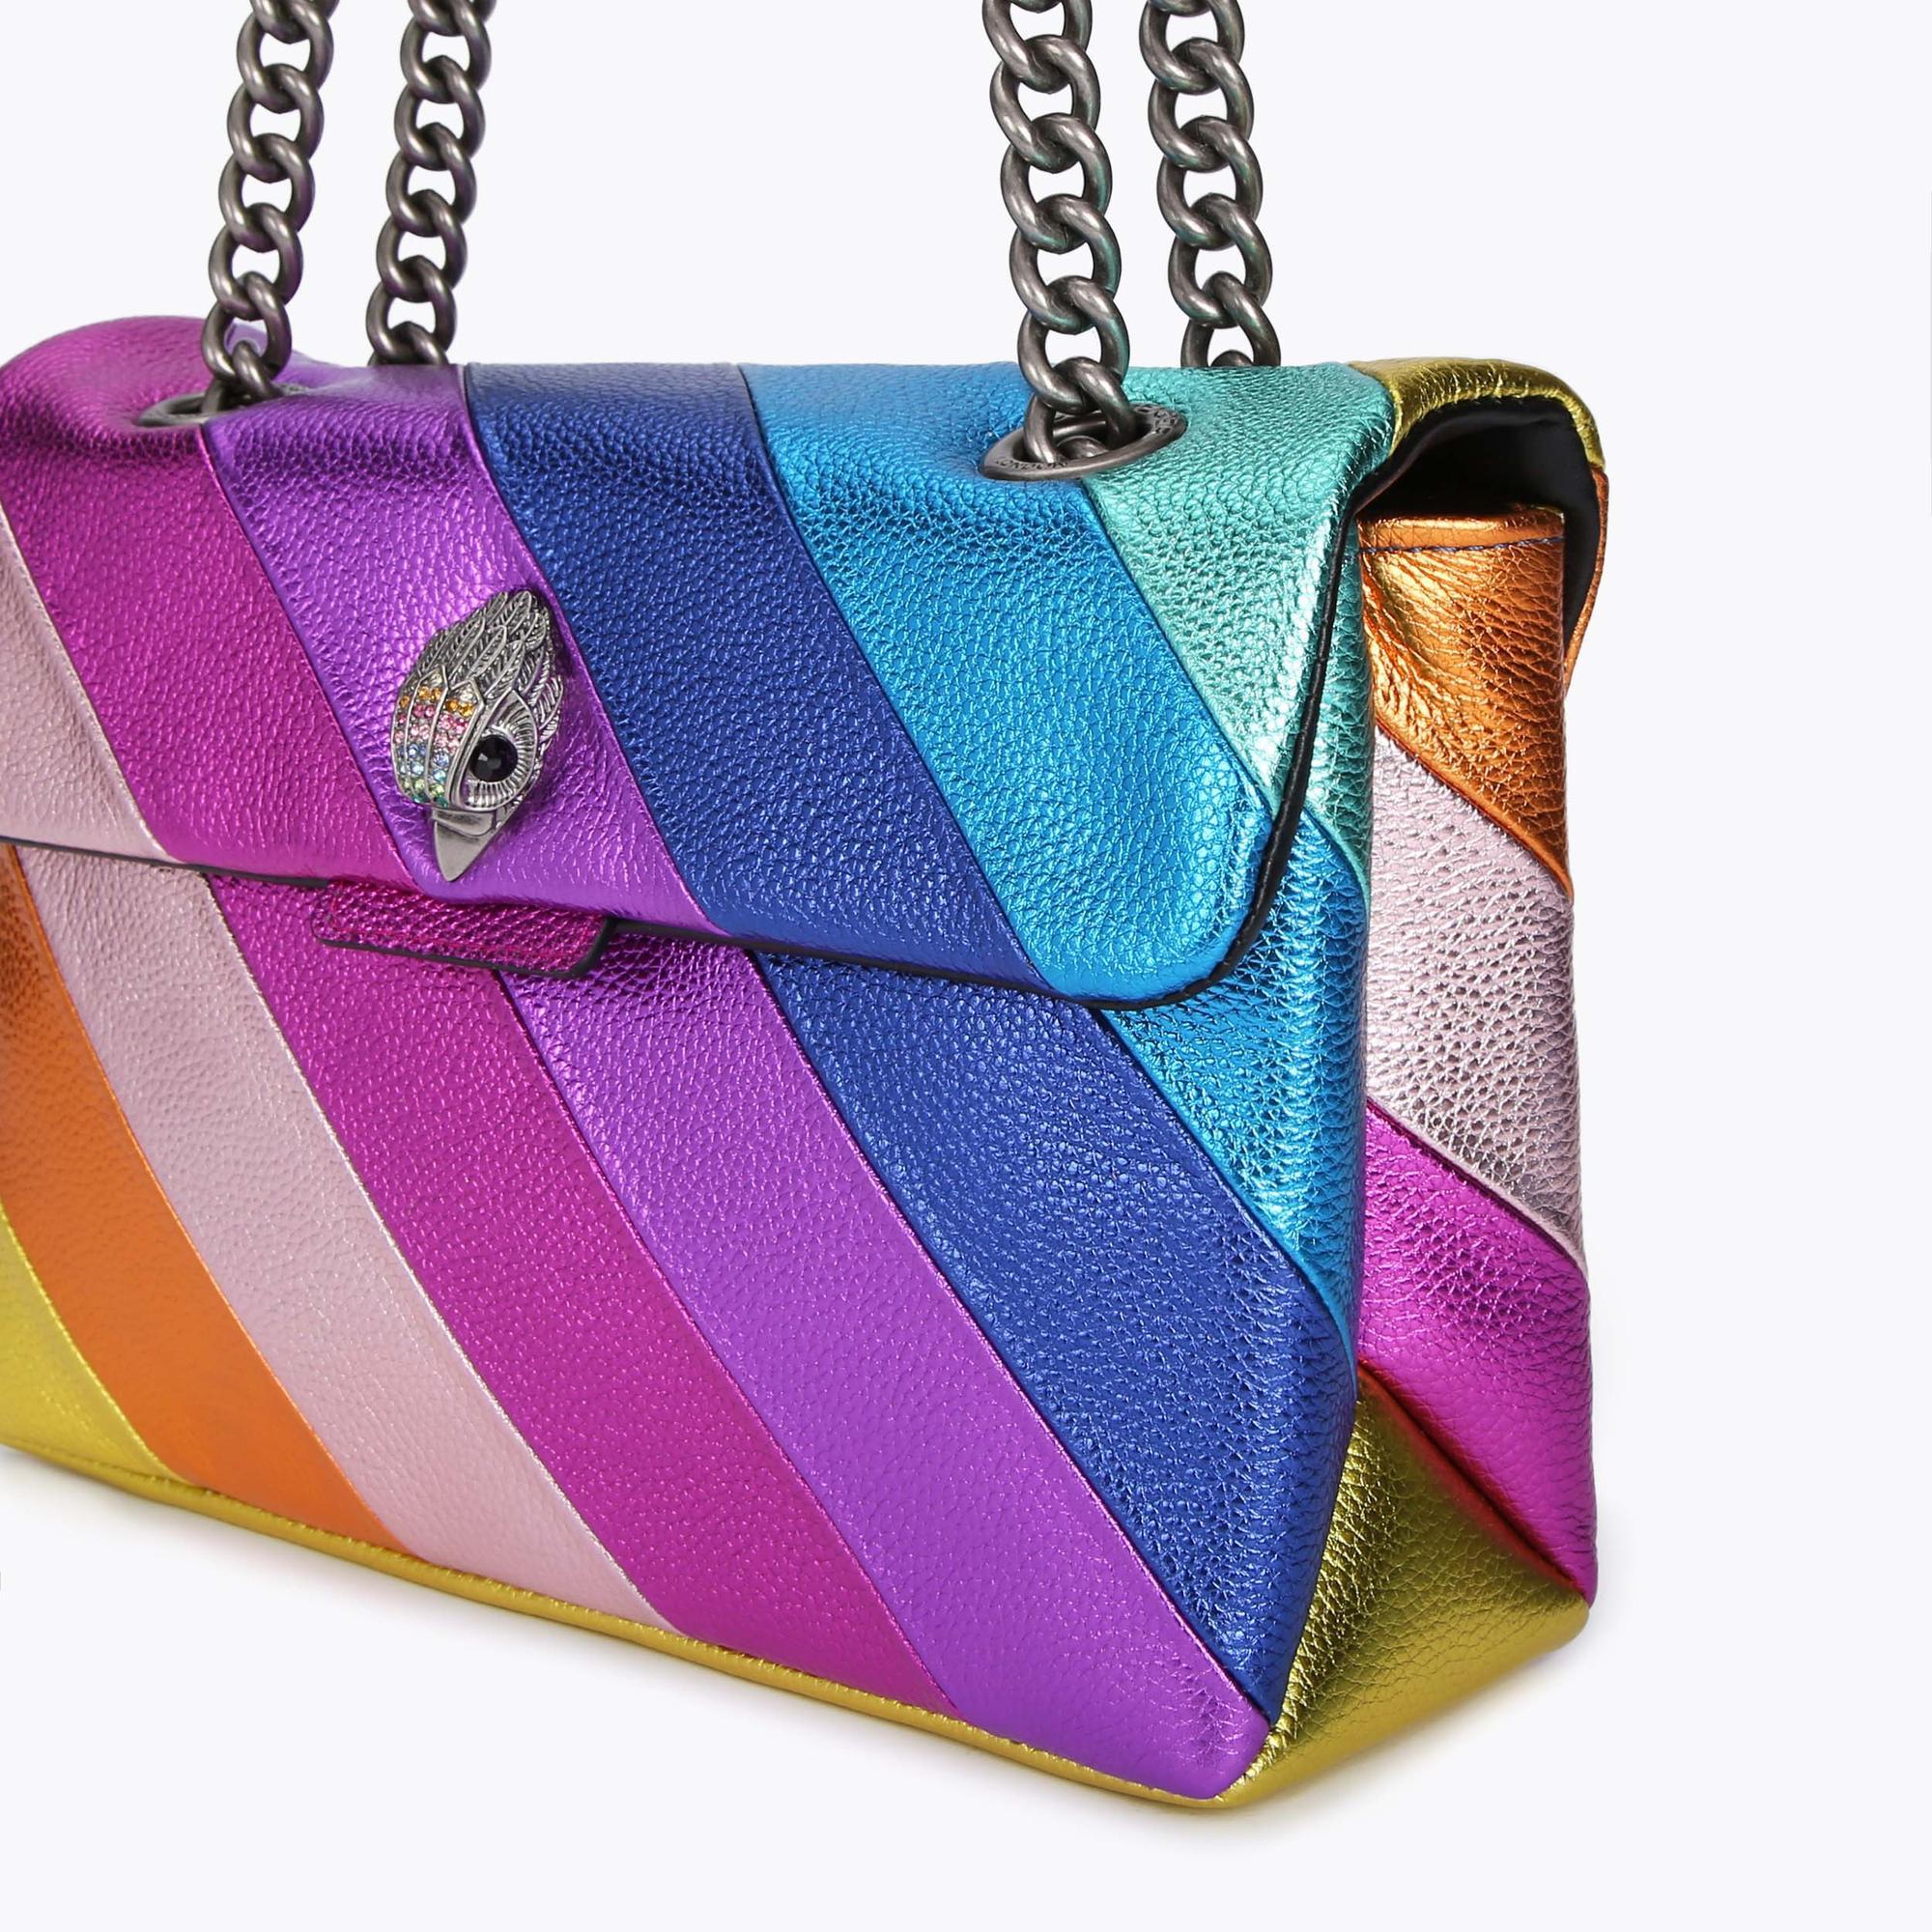 LEATHER KENSINGTON BAG Multi Rainbow Stripe Leather Bag by KURT GEIGER ...